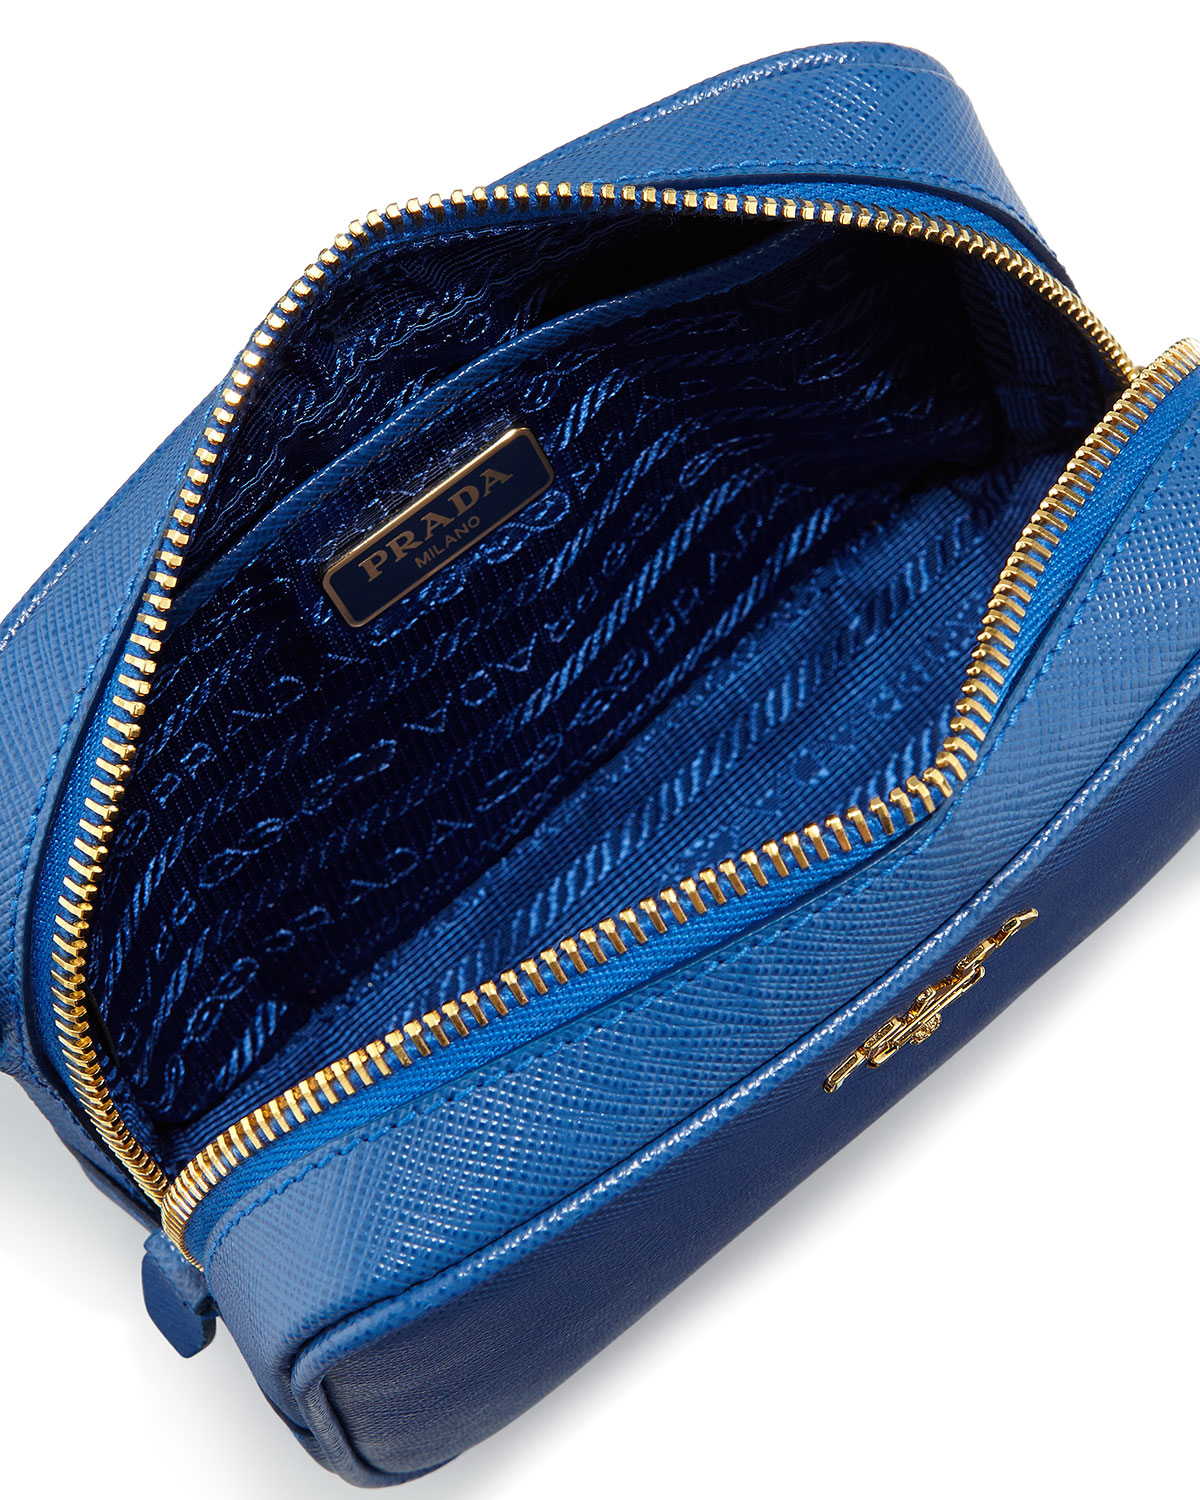 Prada Saffiano Small Crossbody Bag in Cobalt Blue (Blue) - Lyst